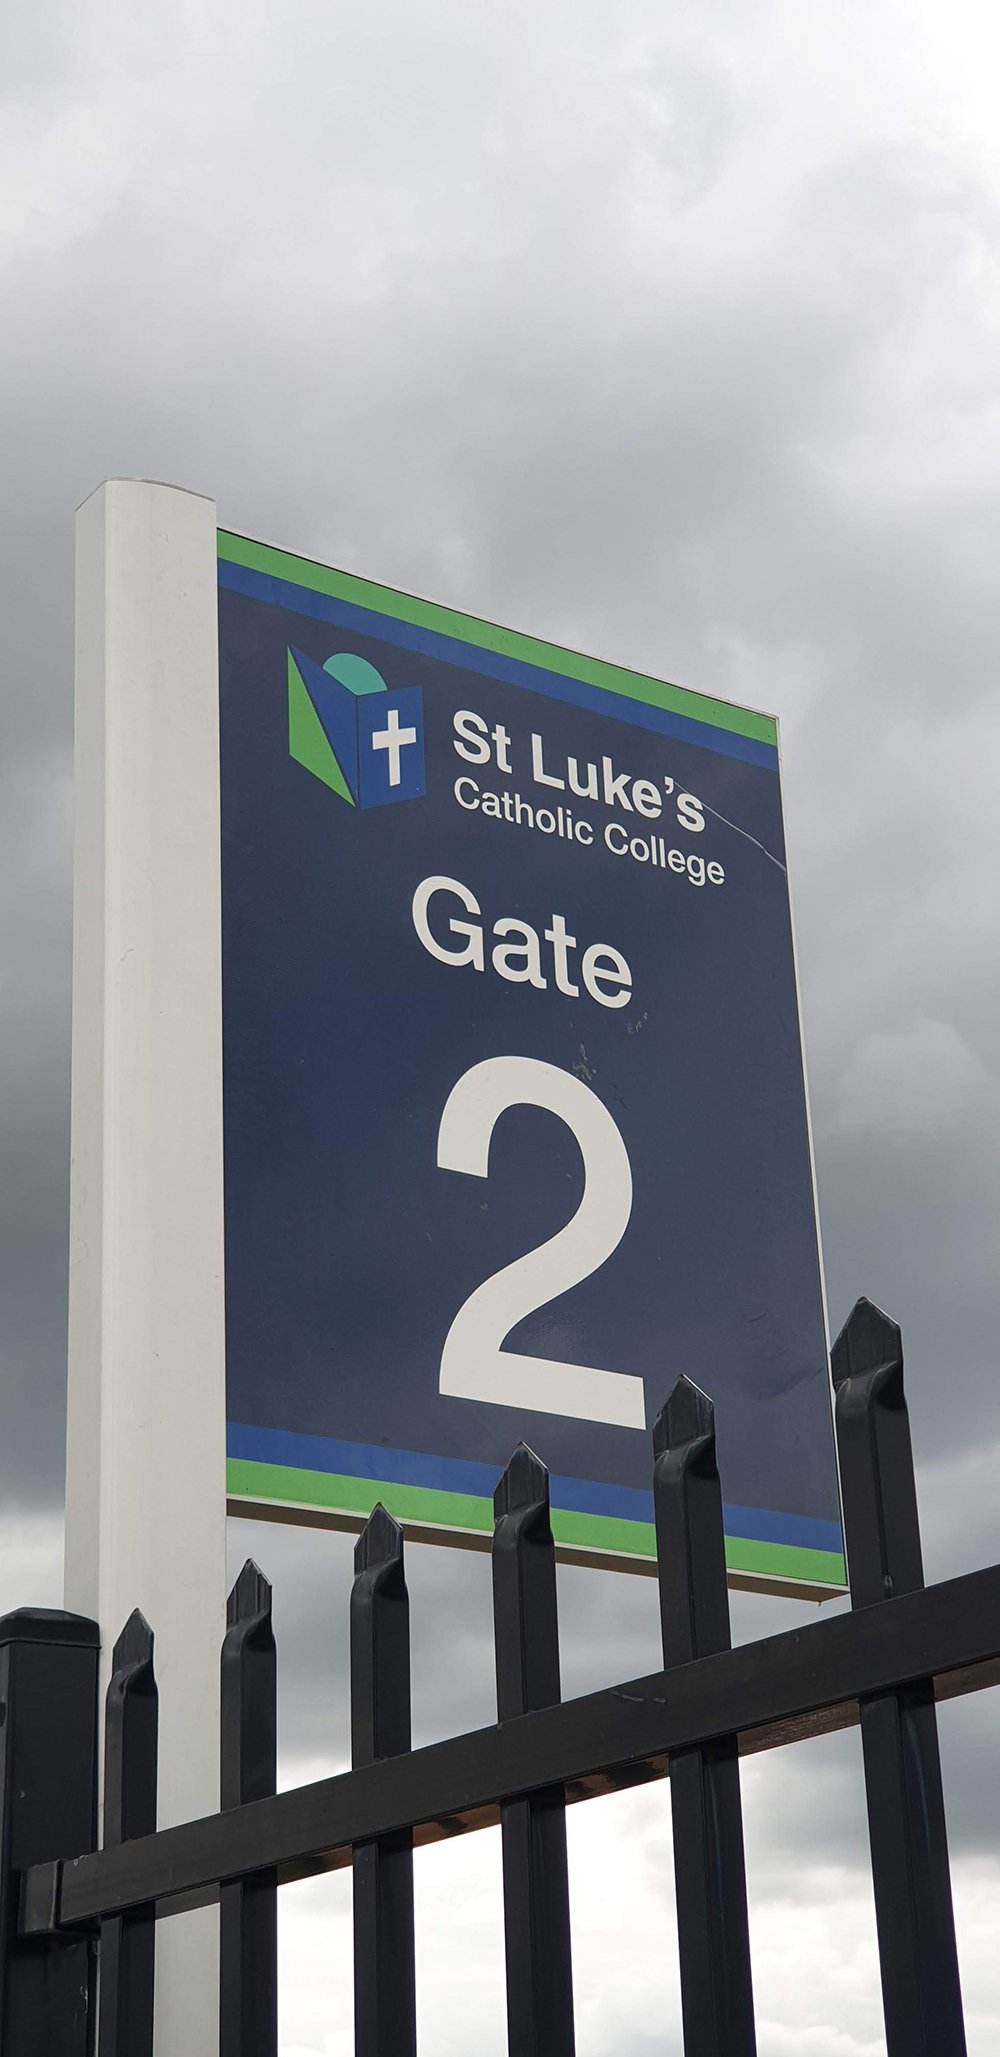 St Luke’s Catholic College